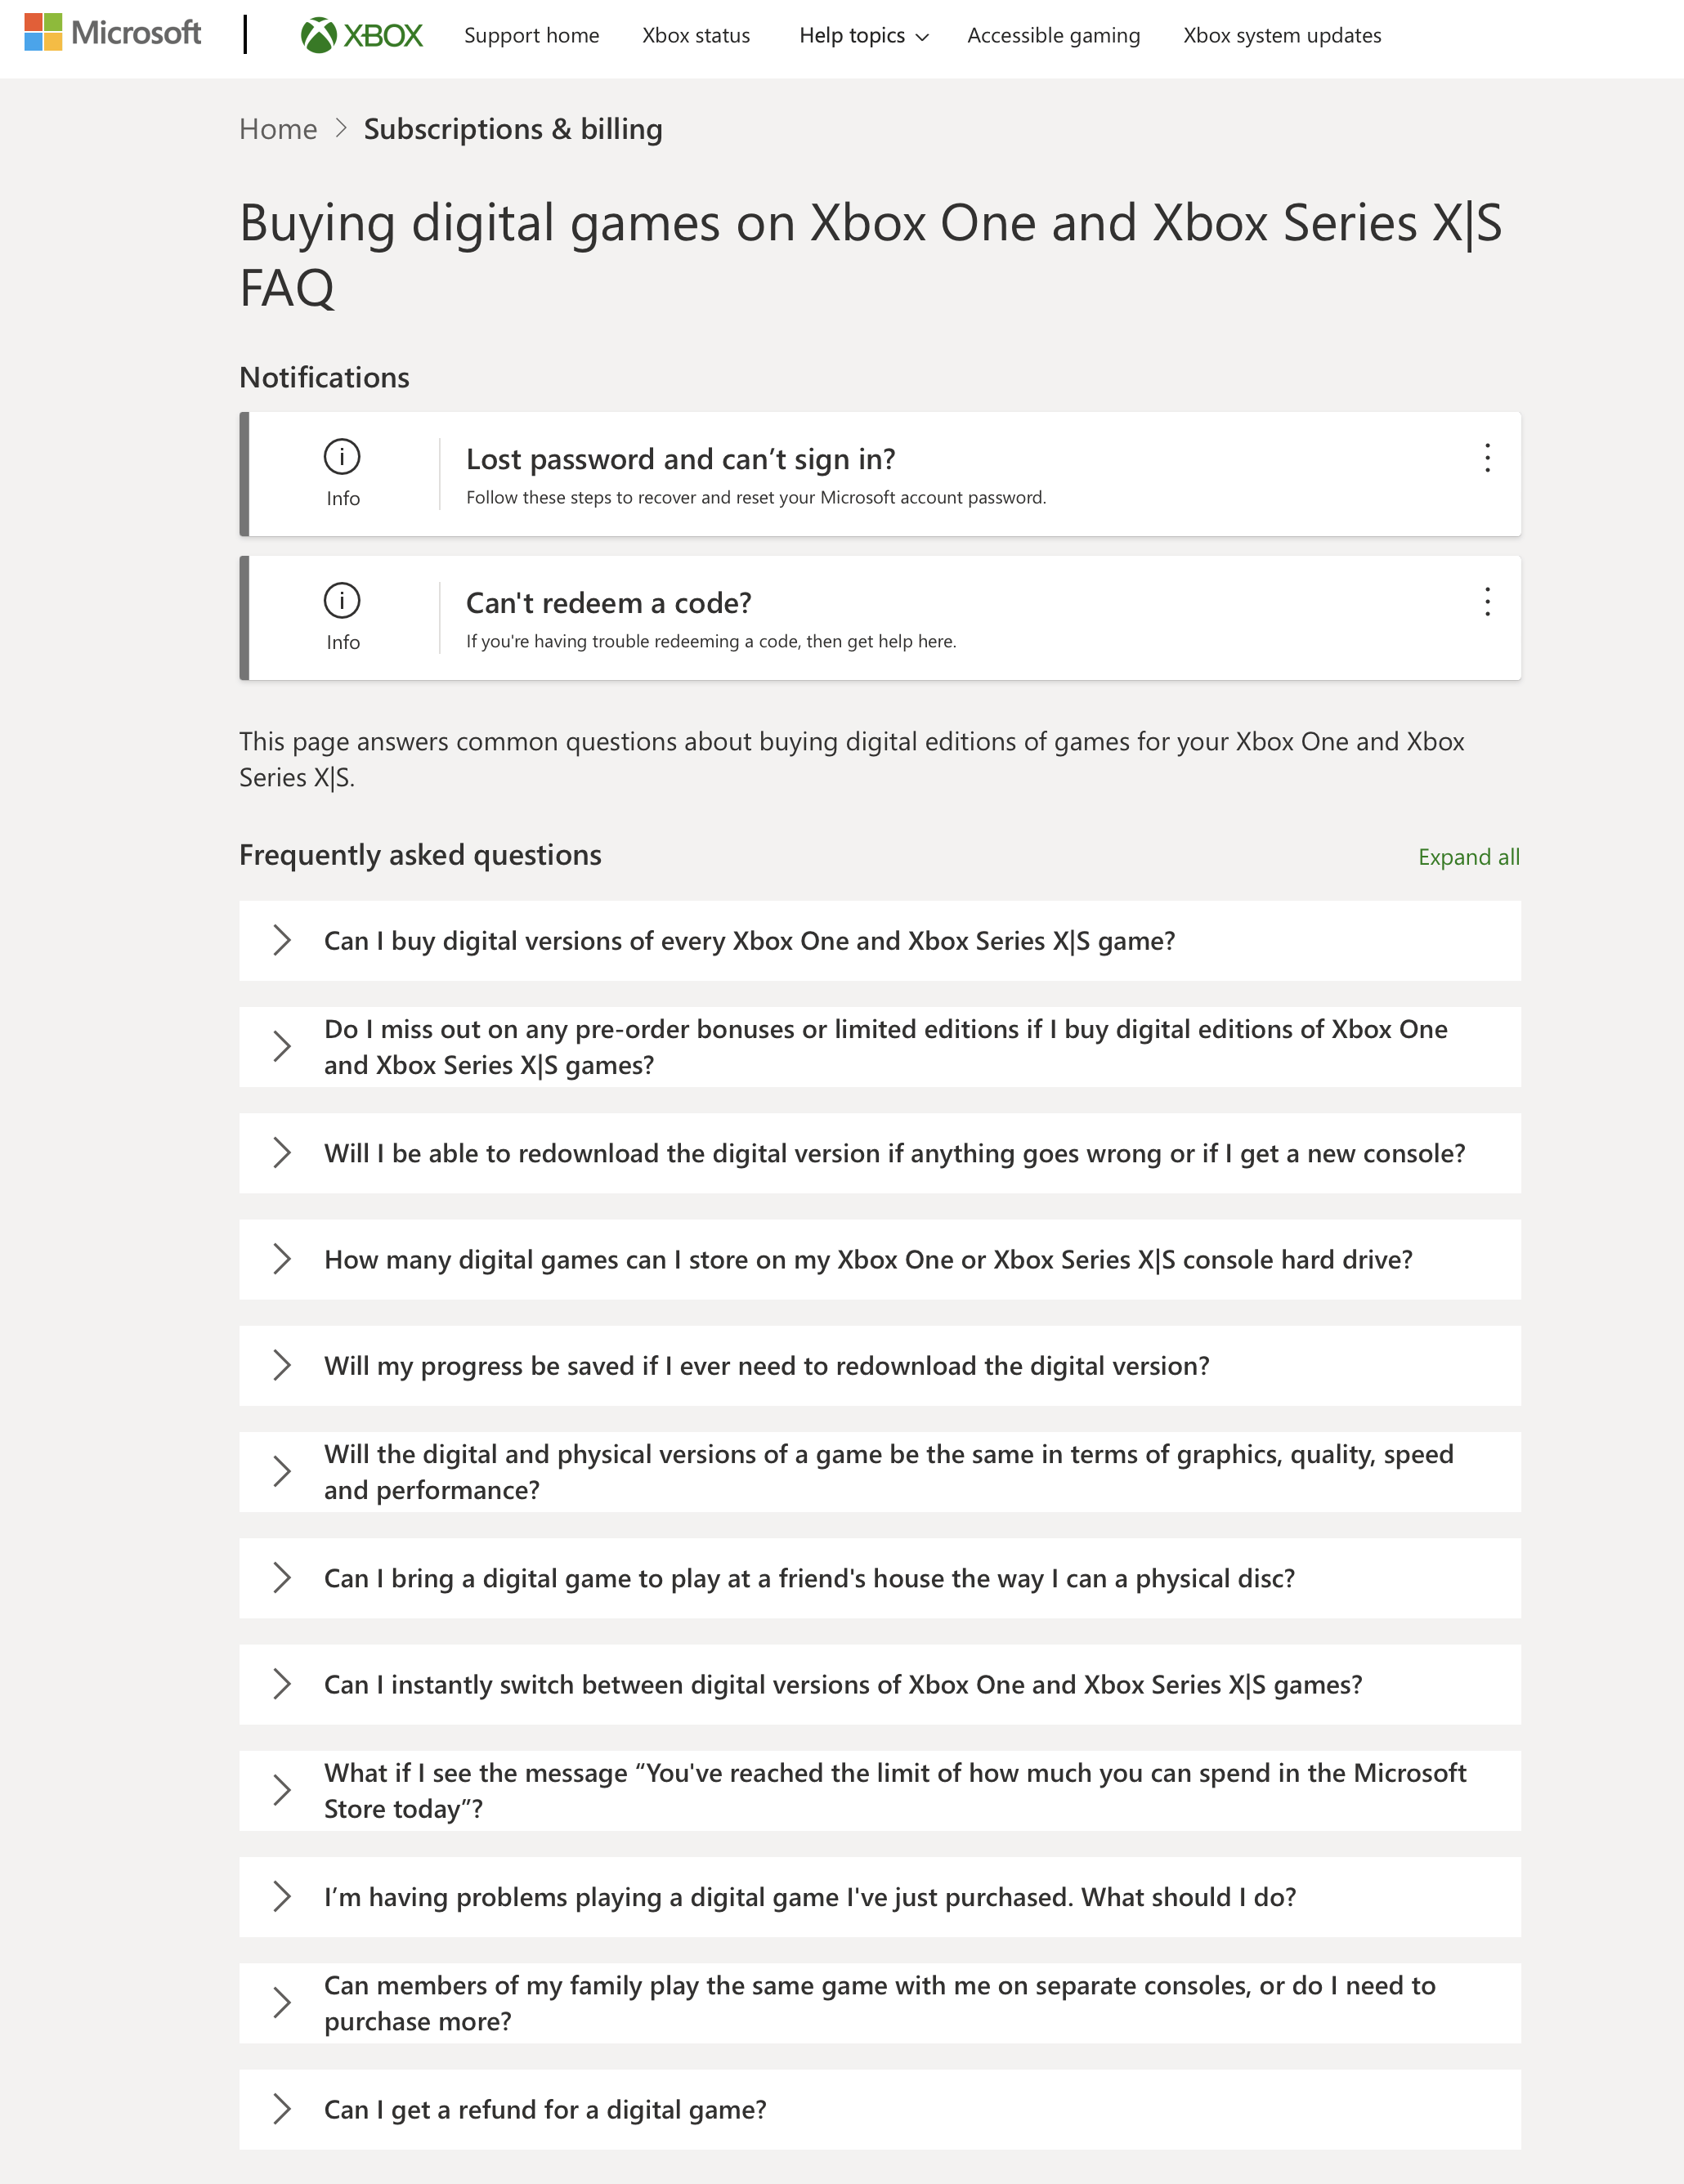 Microsoft Xbox FAQ Page